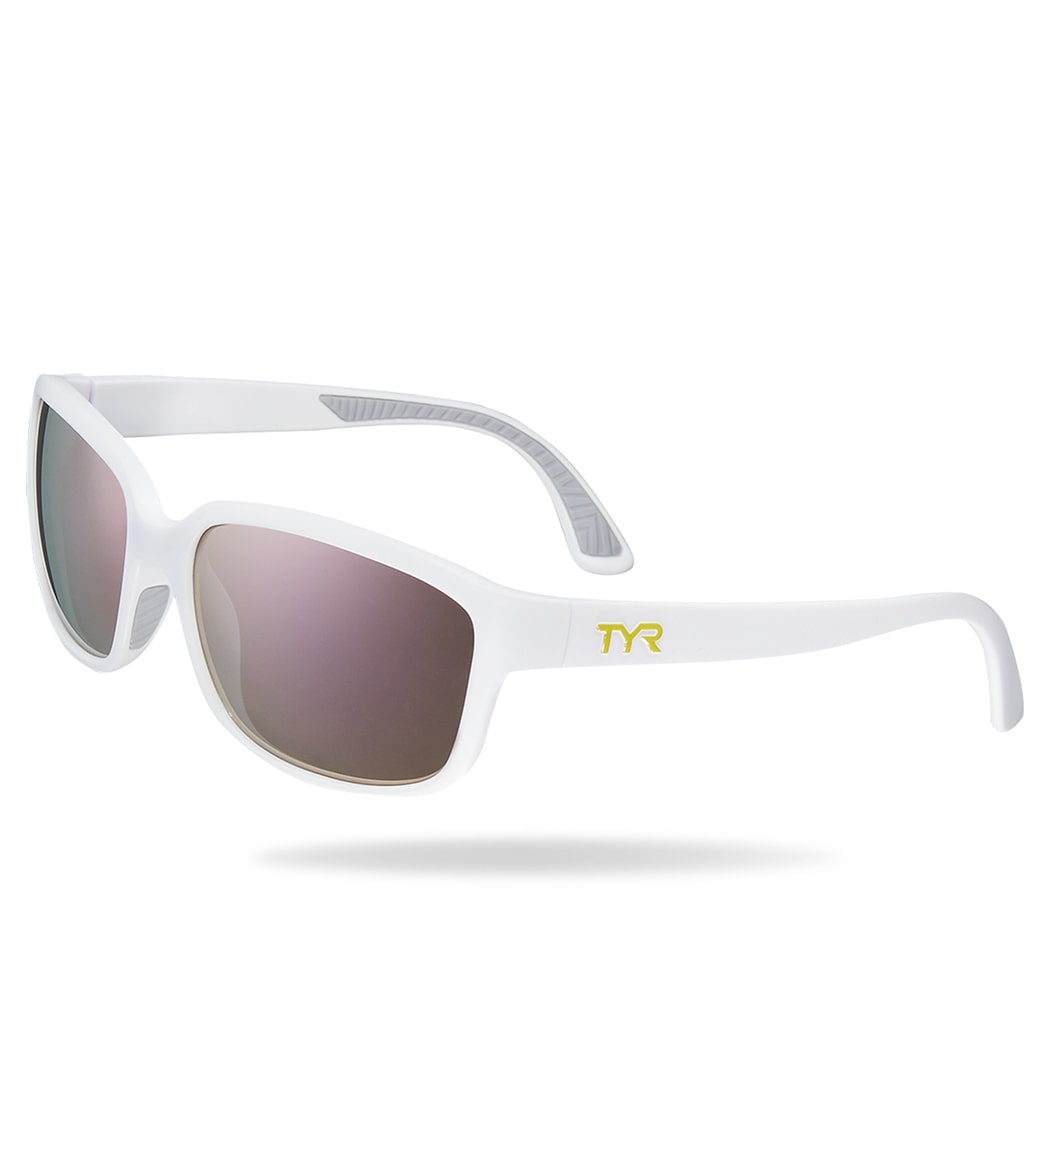 TYR Women's Mora Kai Wrap Sunglasses - Pink/White - Swimoutlet.com